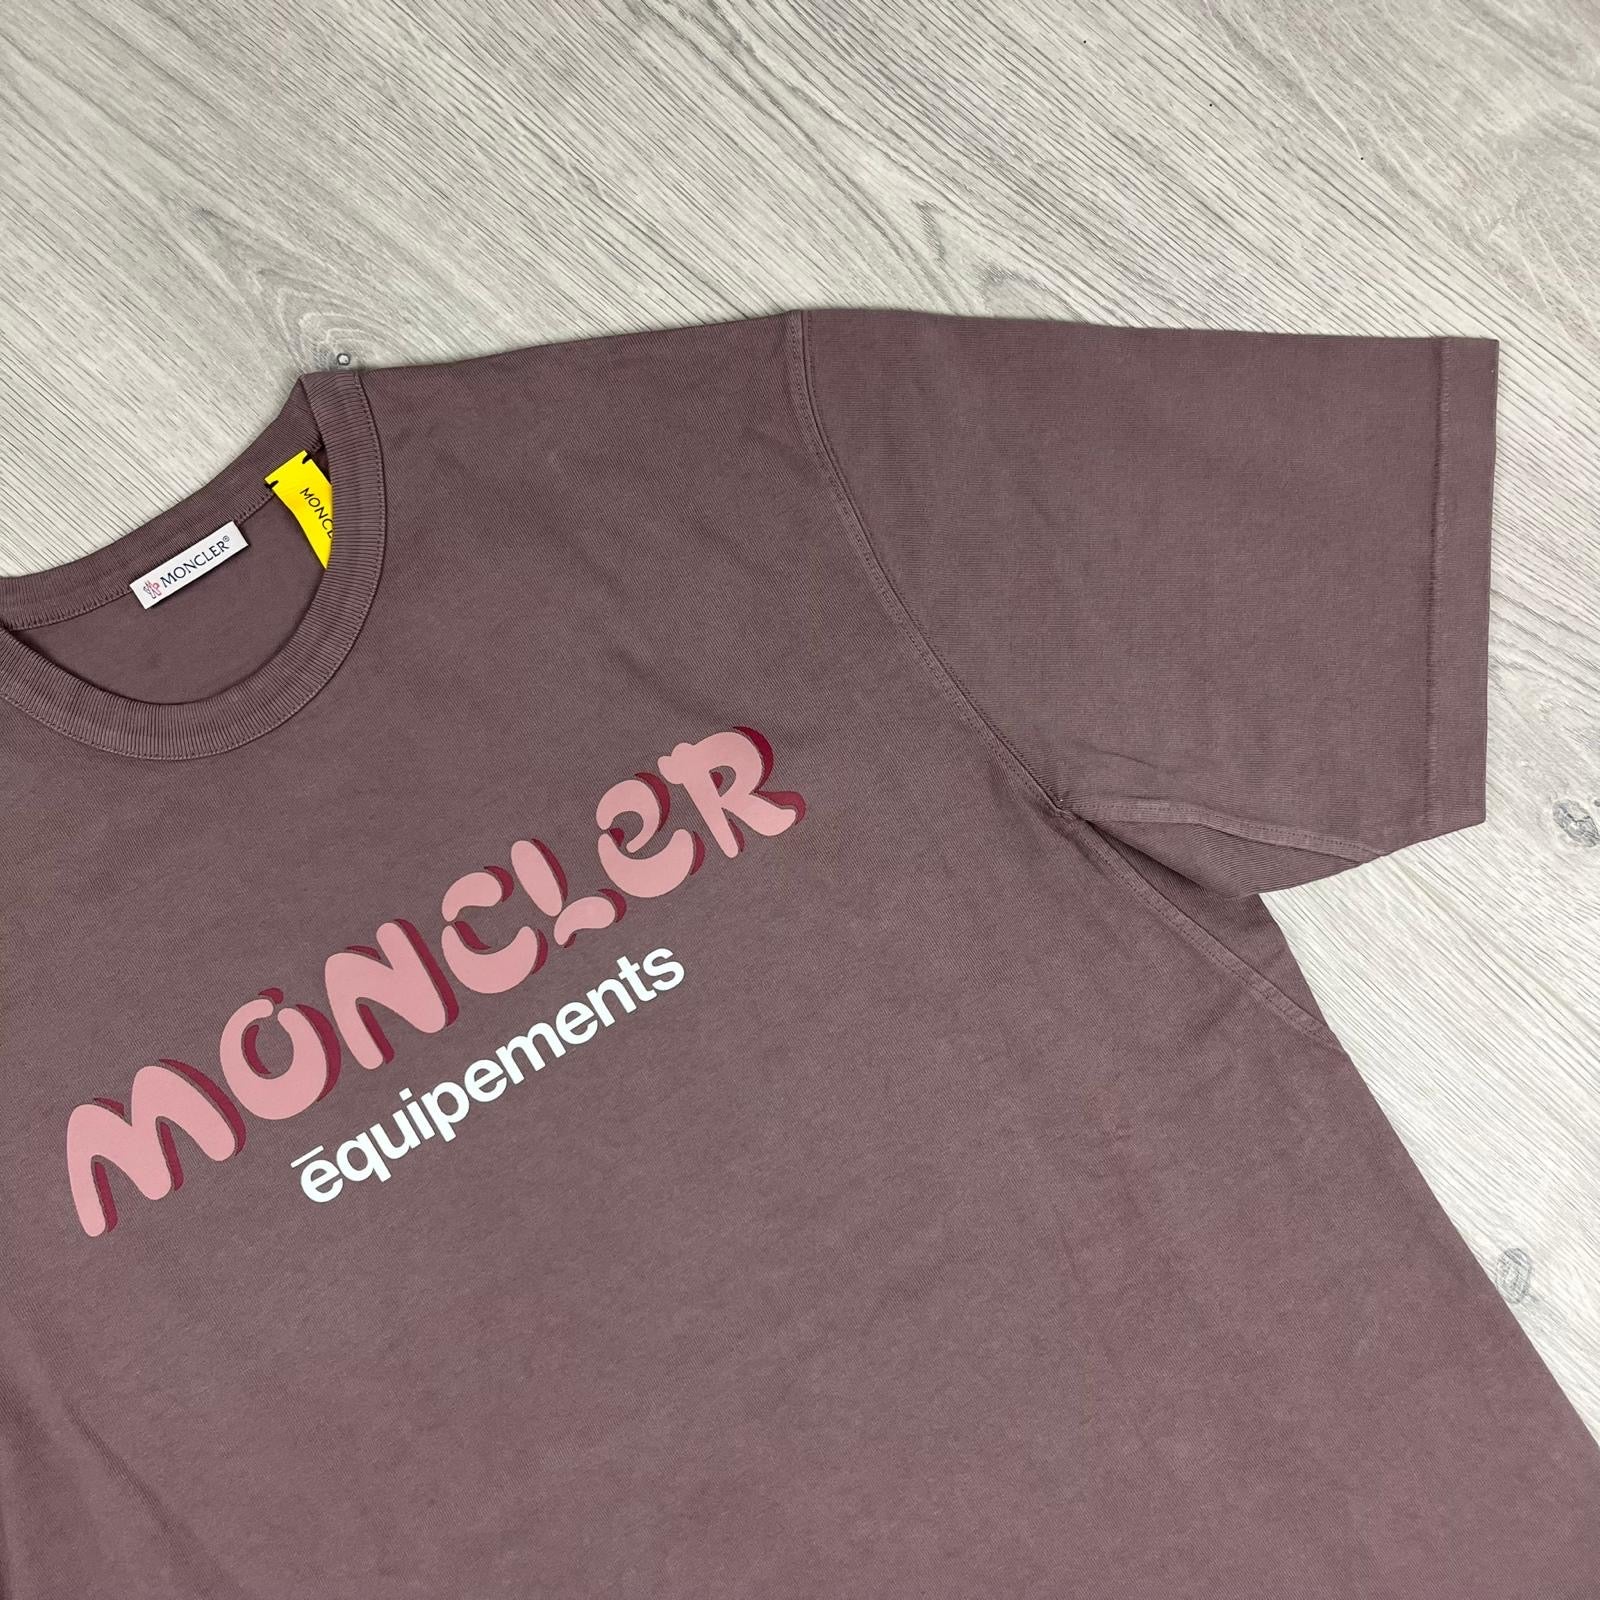 Moncler Genius T-Shirt